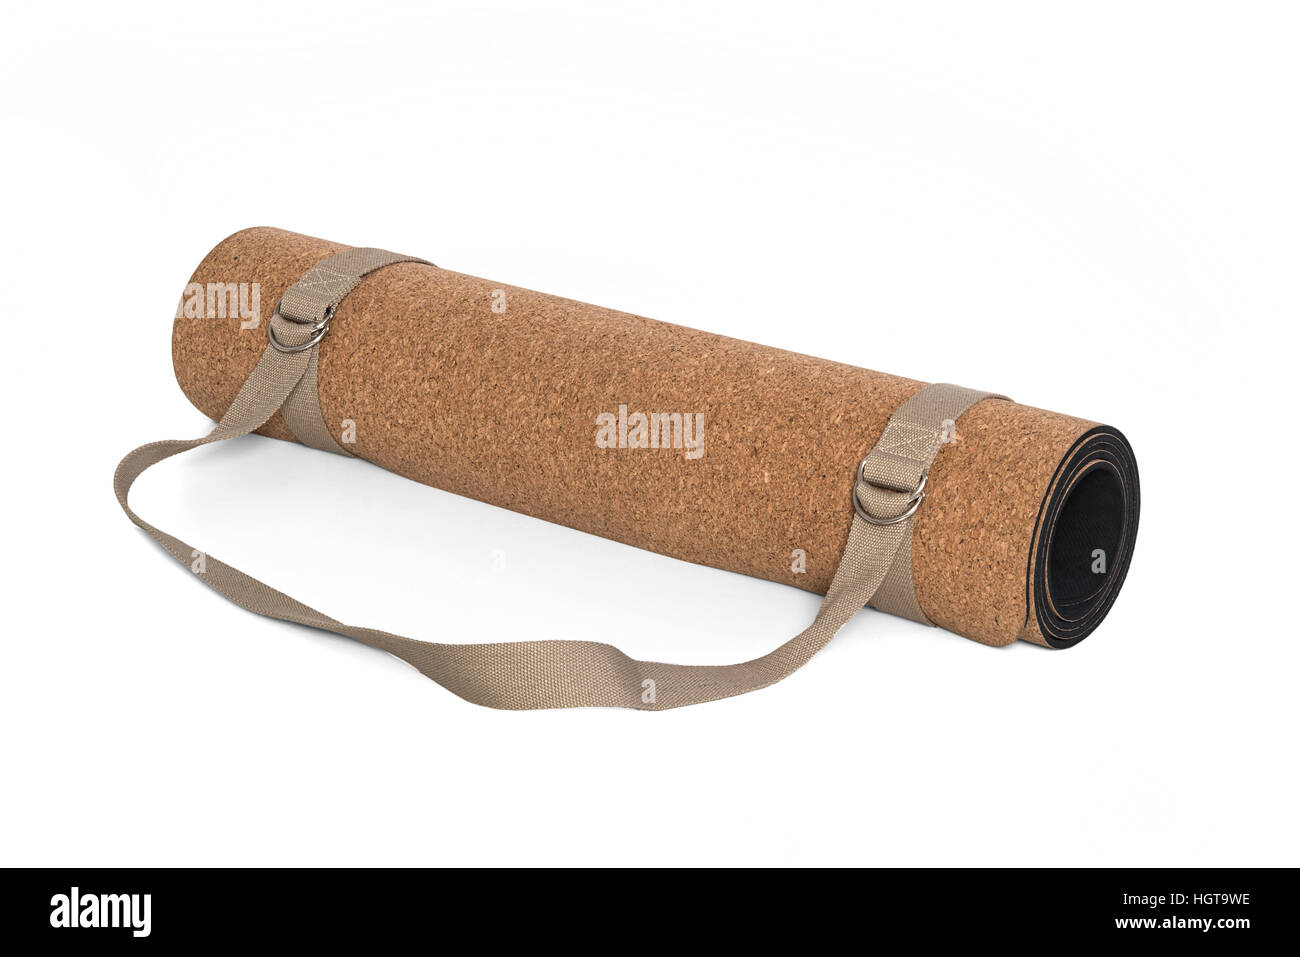 Tapis de Yoga en liège avec sangle, Premium Eco Friendly produit sur fond  blanc Photo Stock - Alamy